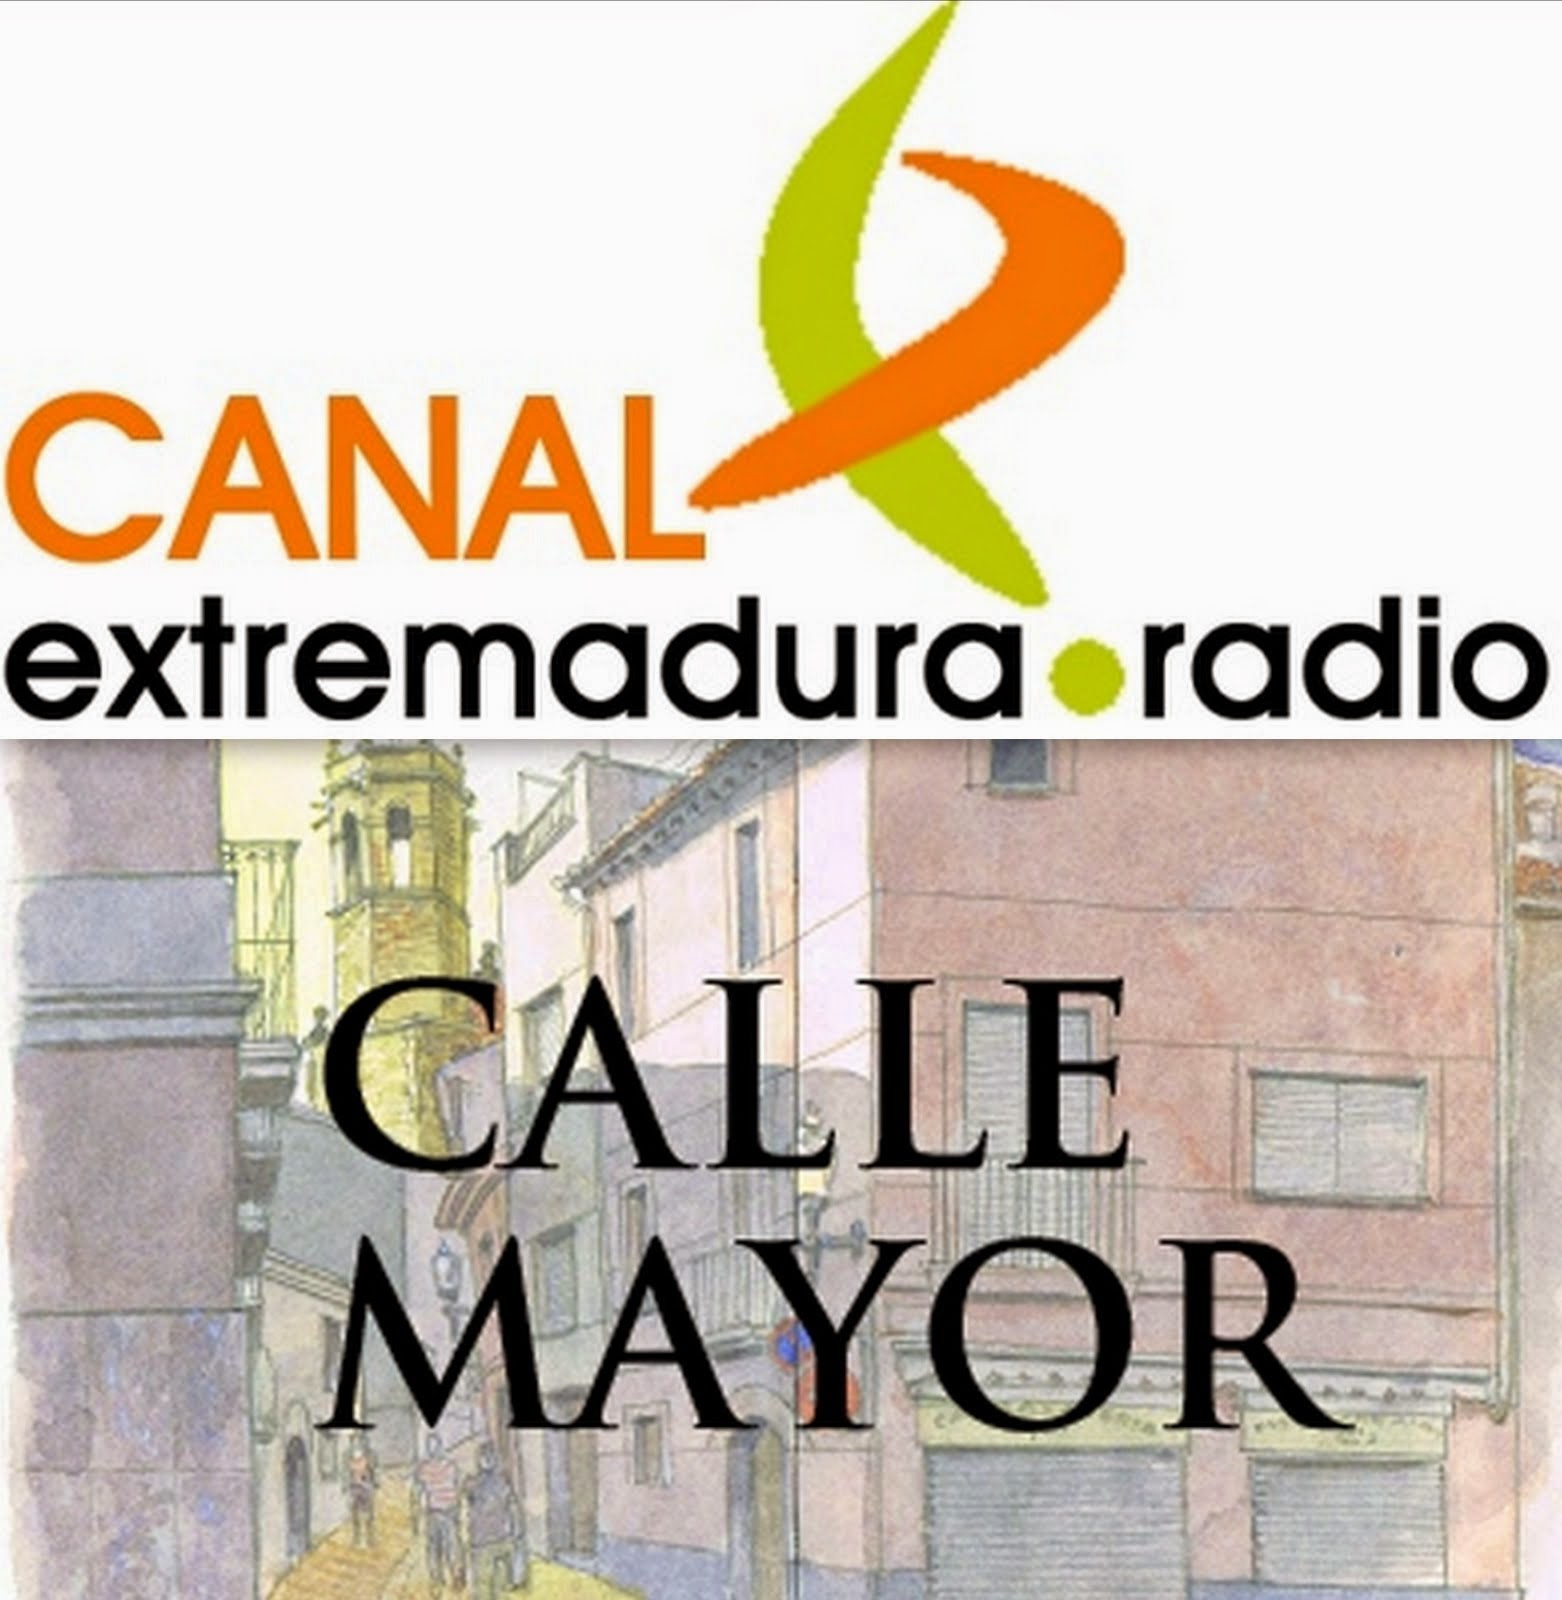 Canal Extremadura Radio: Calle Mayor